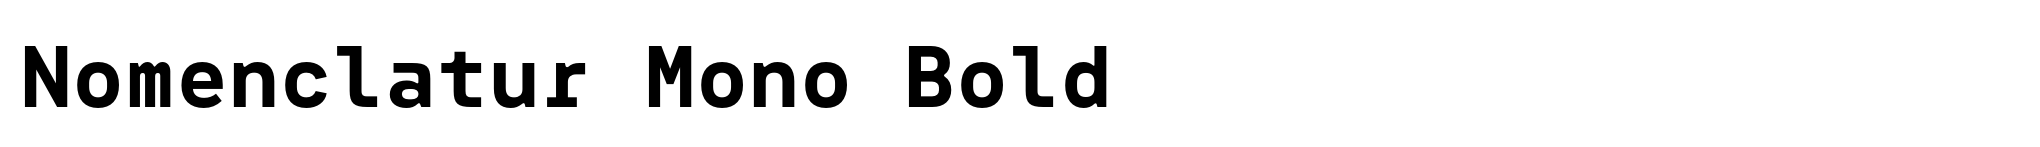 Nomenclatur Mono Bold image